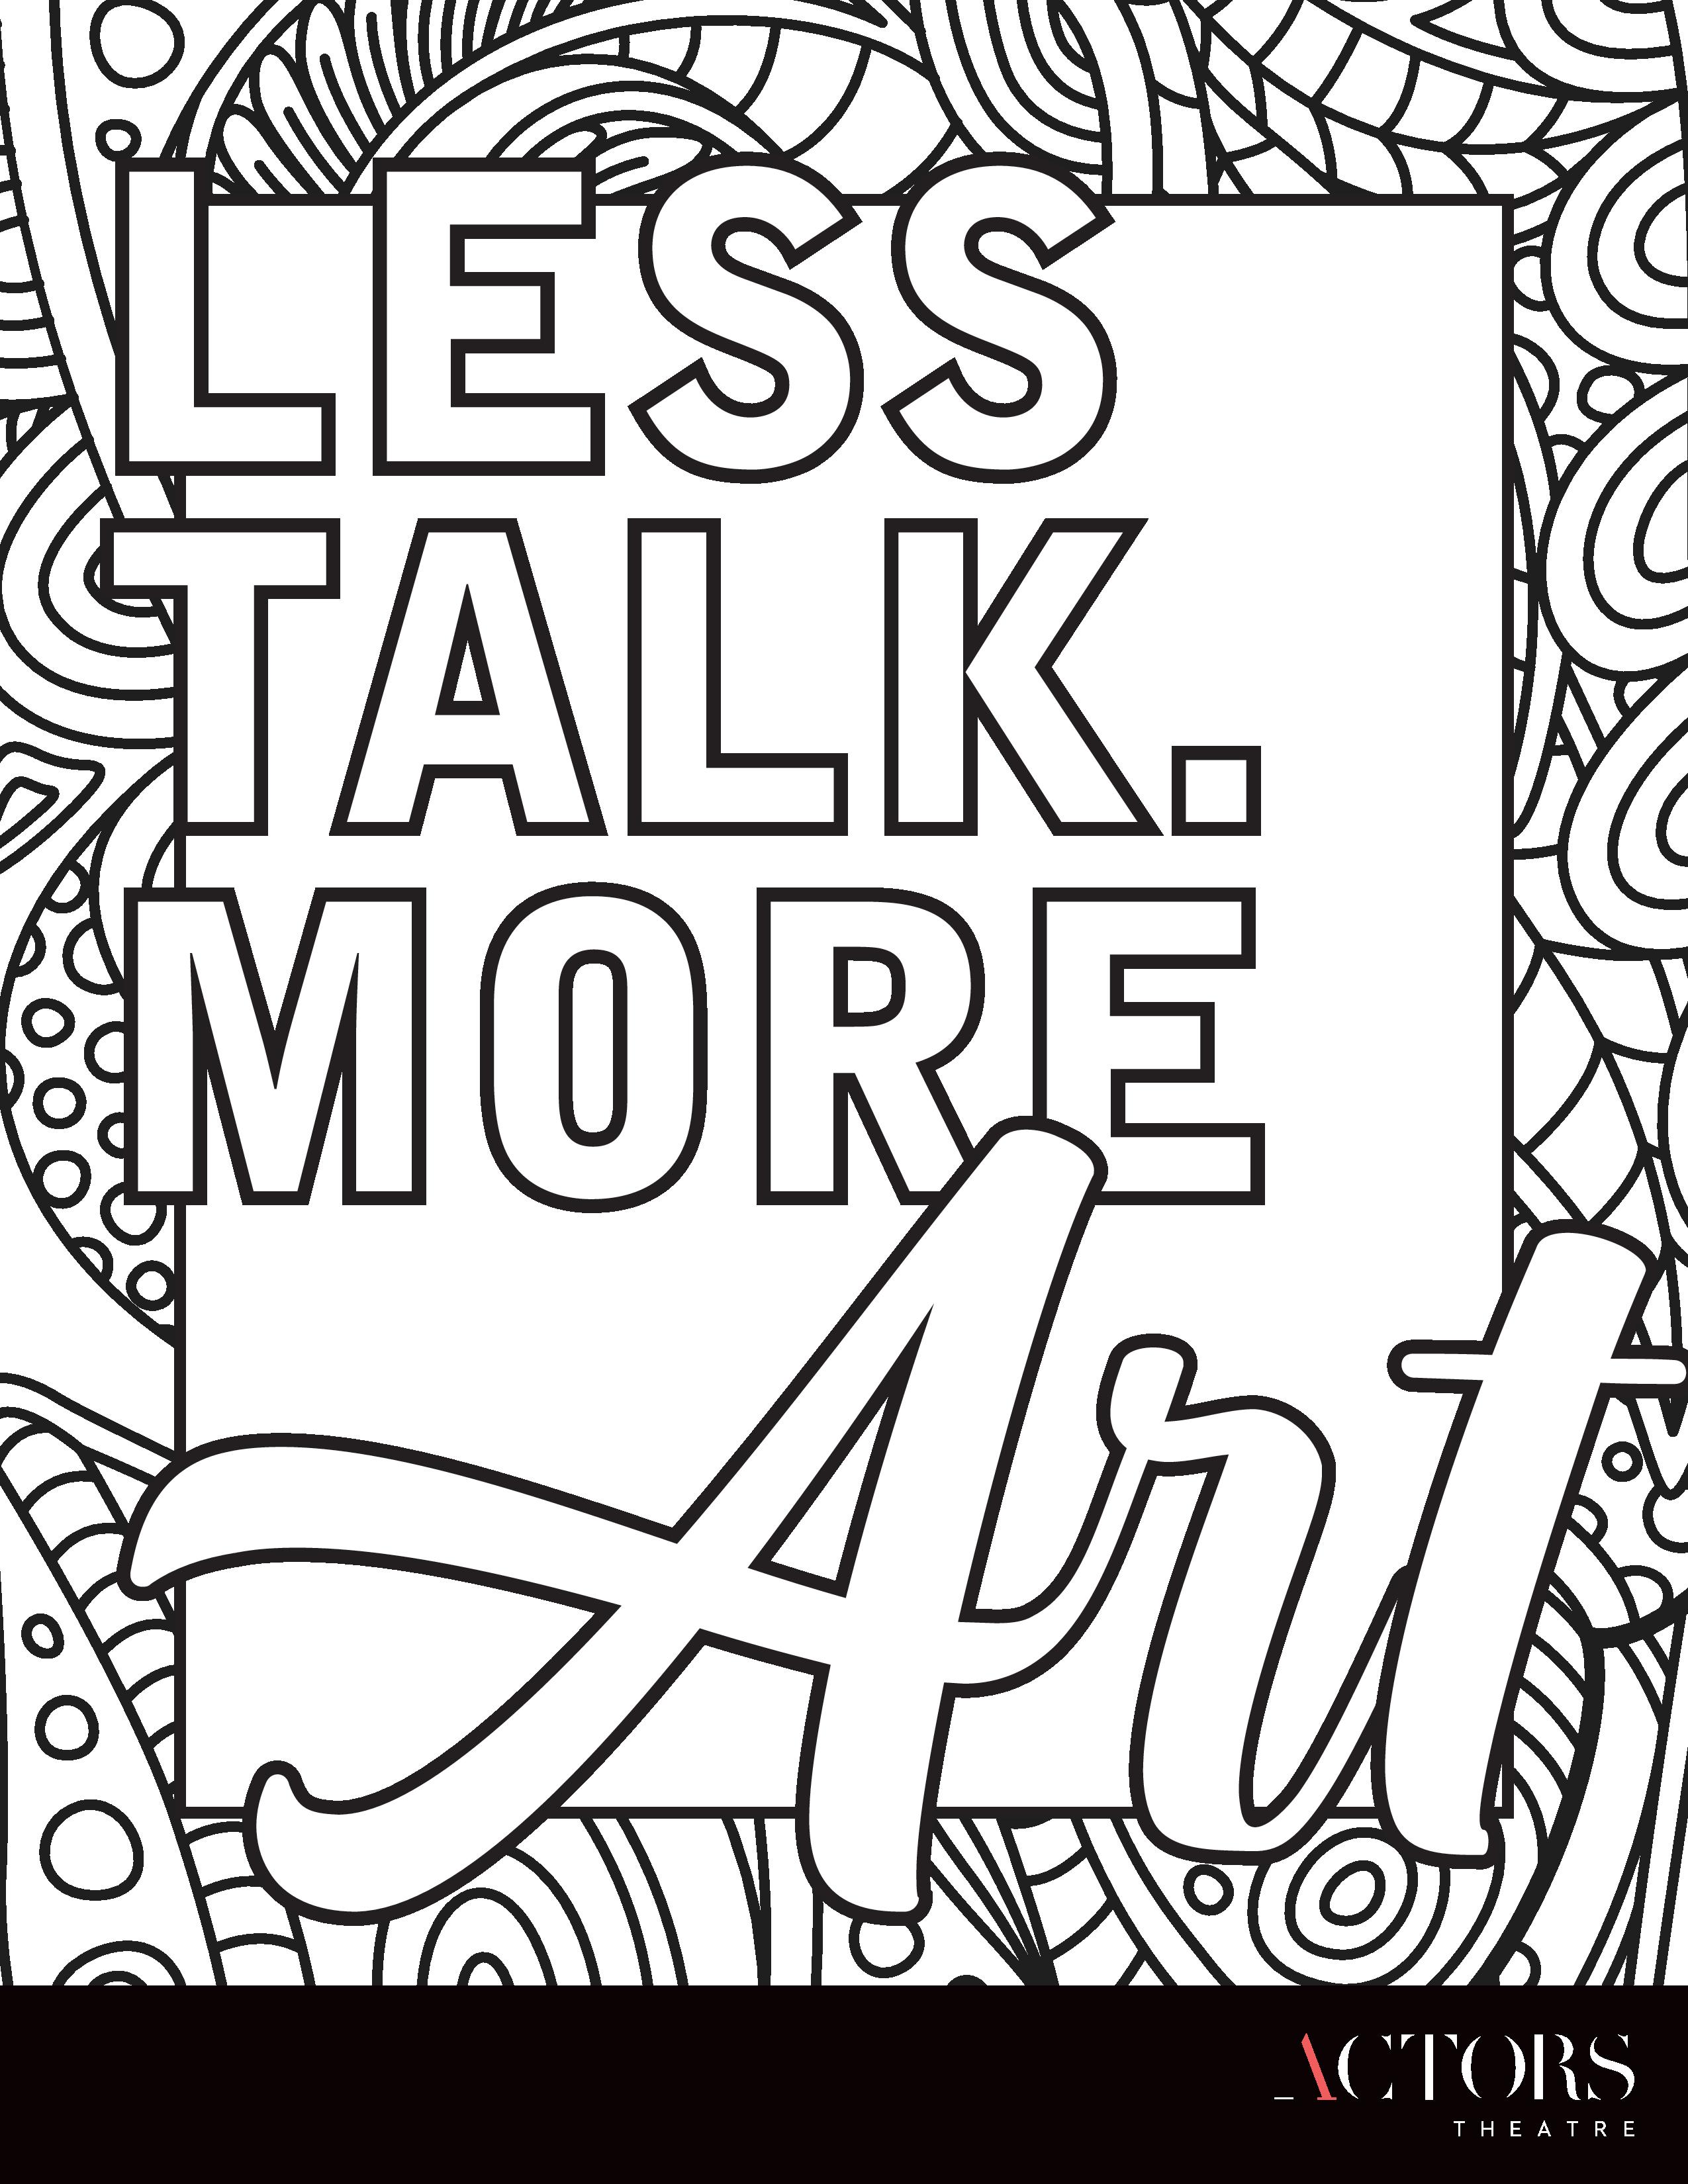 Less talk more art